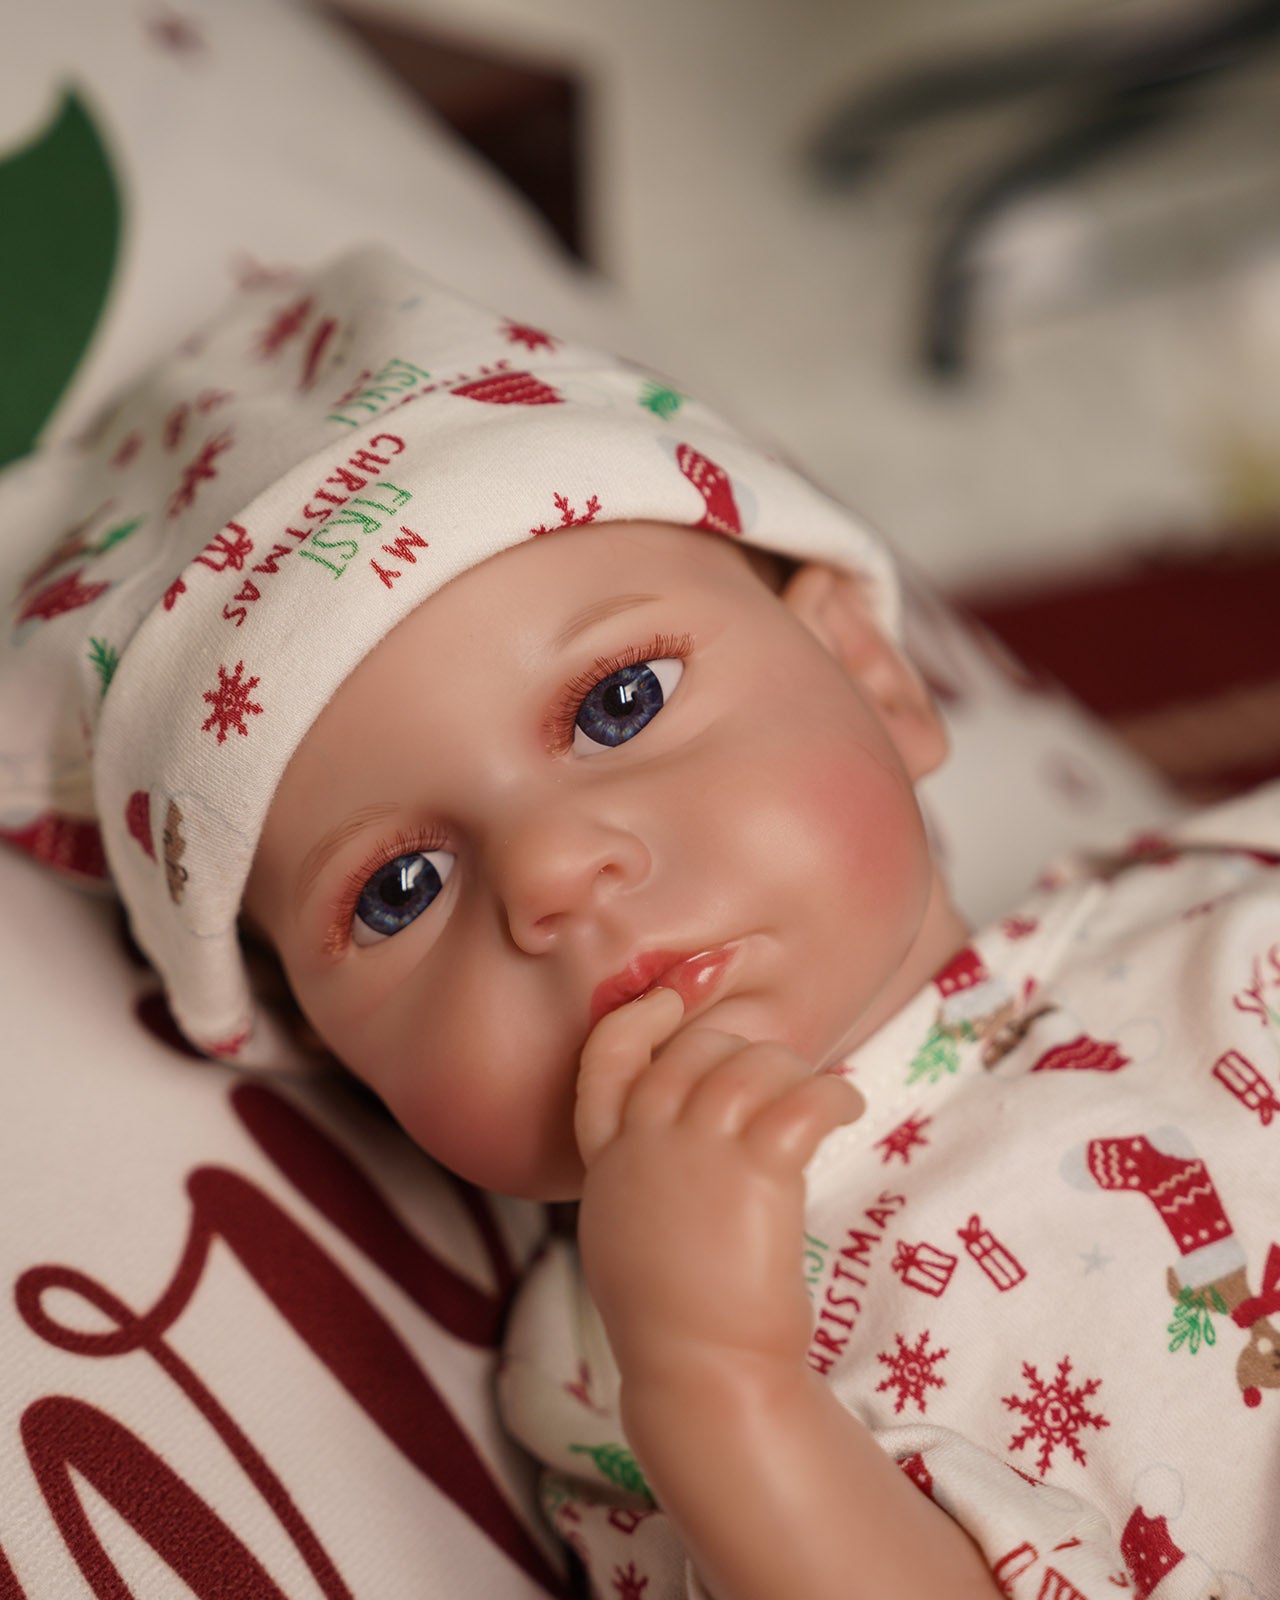 Gabrielle - 20" Reborn Baby Dolls Adorable Chubby Newborn Girl with Realistic Hand Drawn Veins